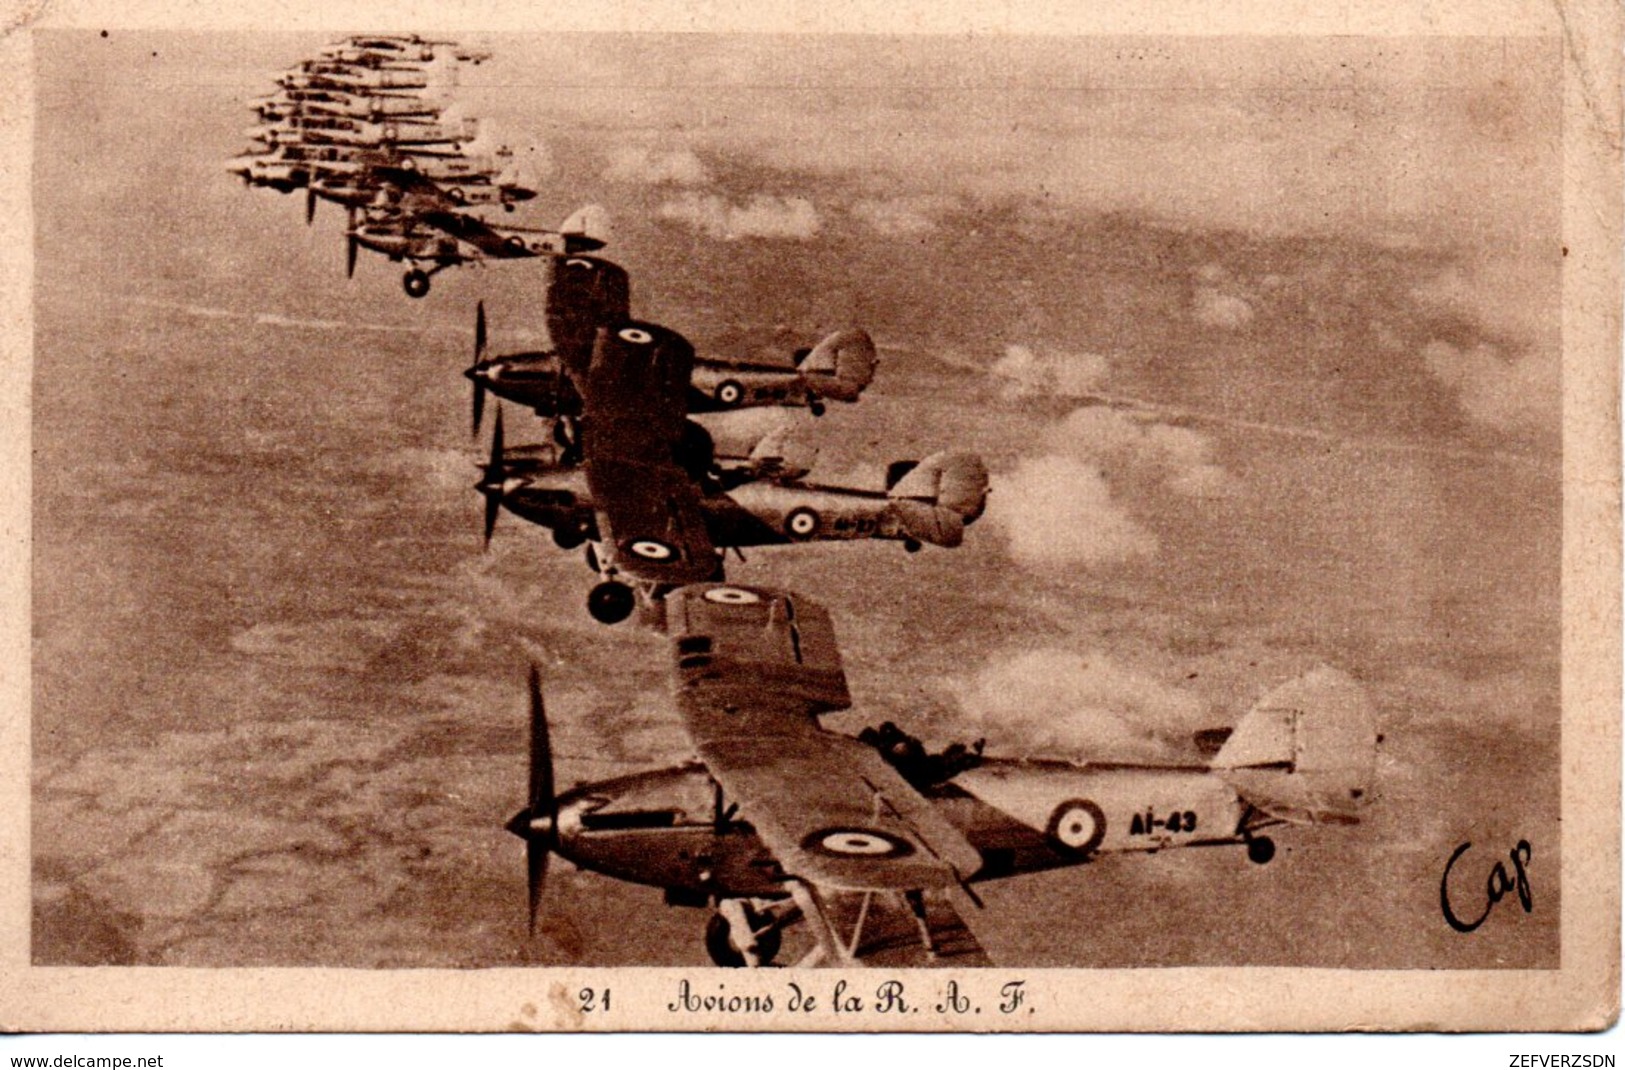 AVIONS AVIATION RAF - 1939-1945: 2ème Guerre